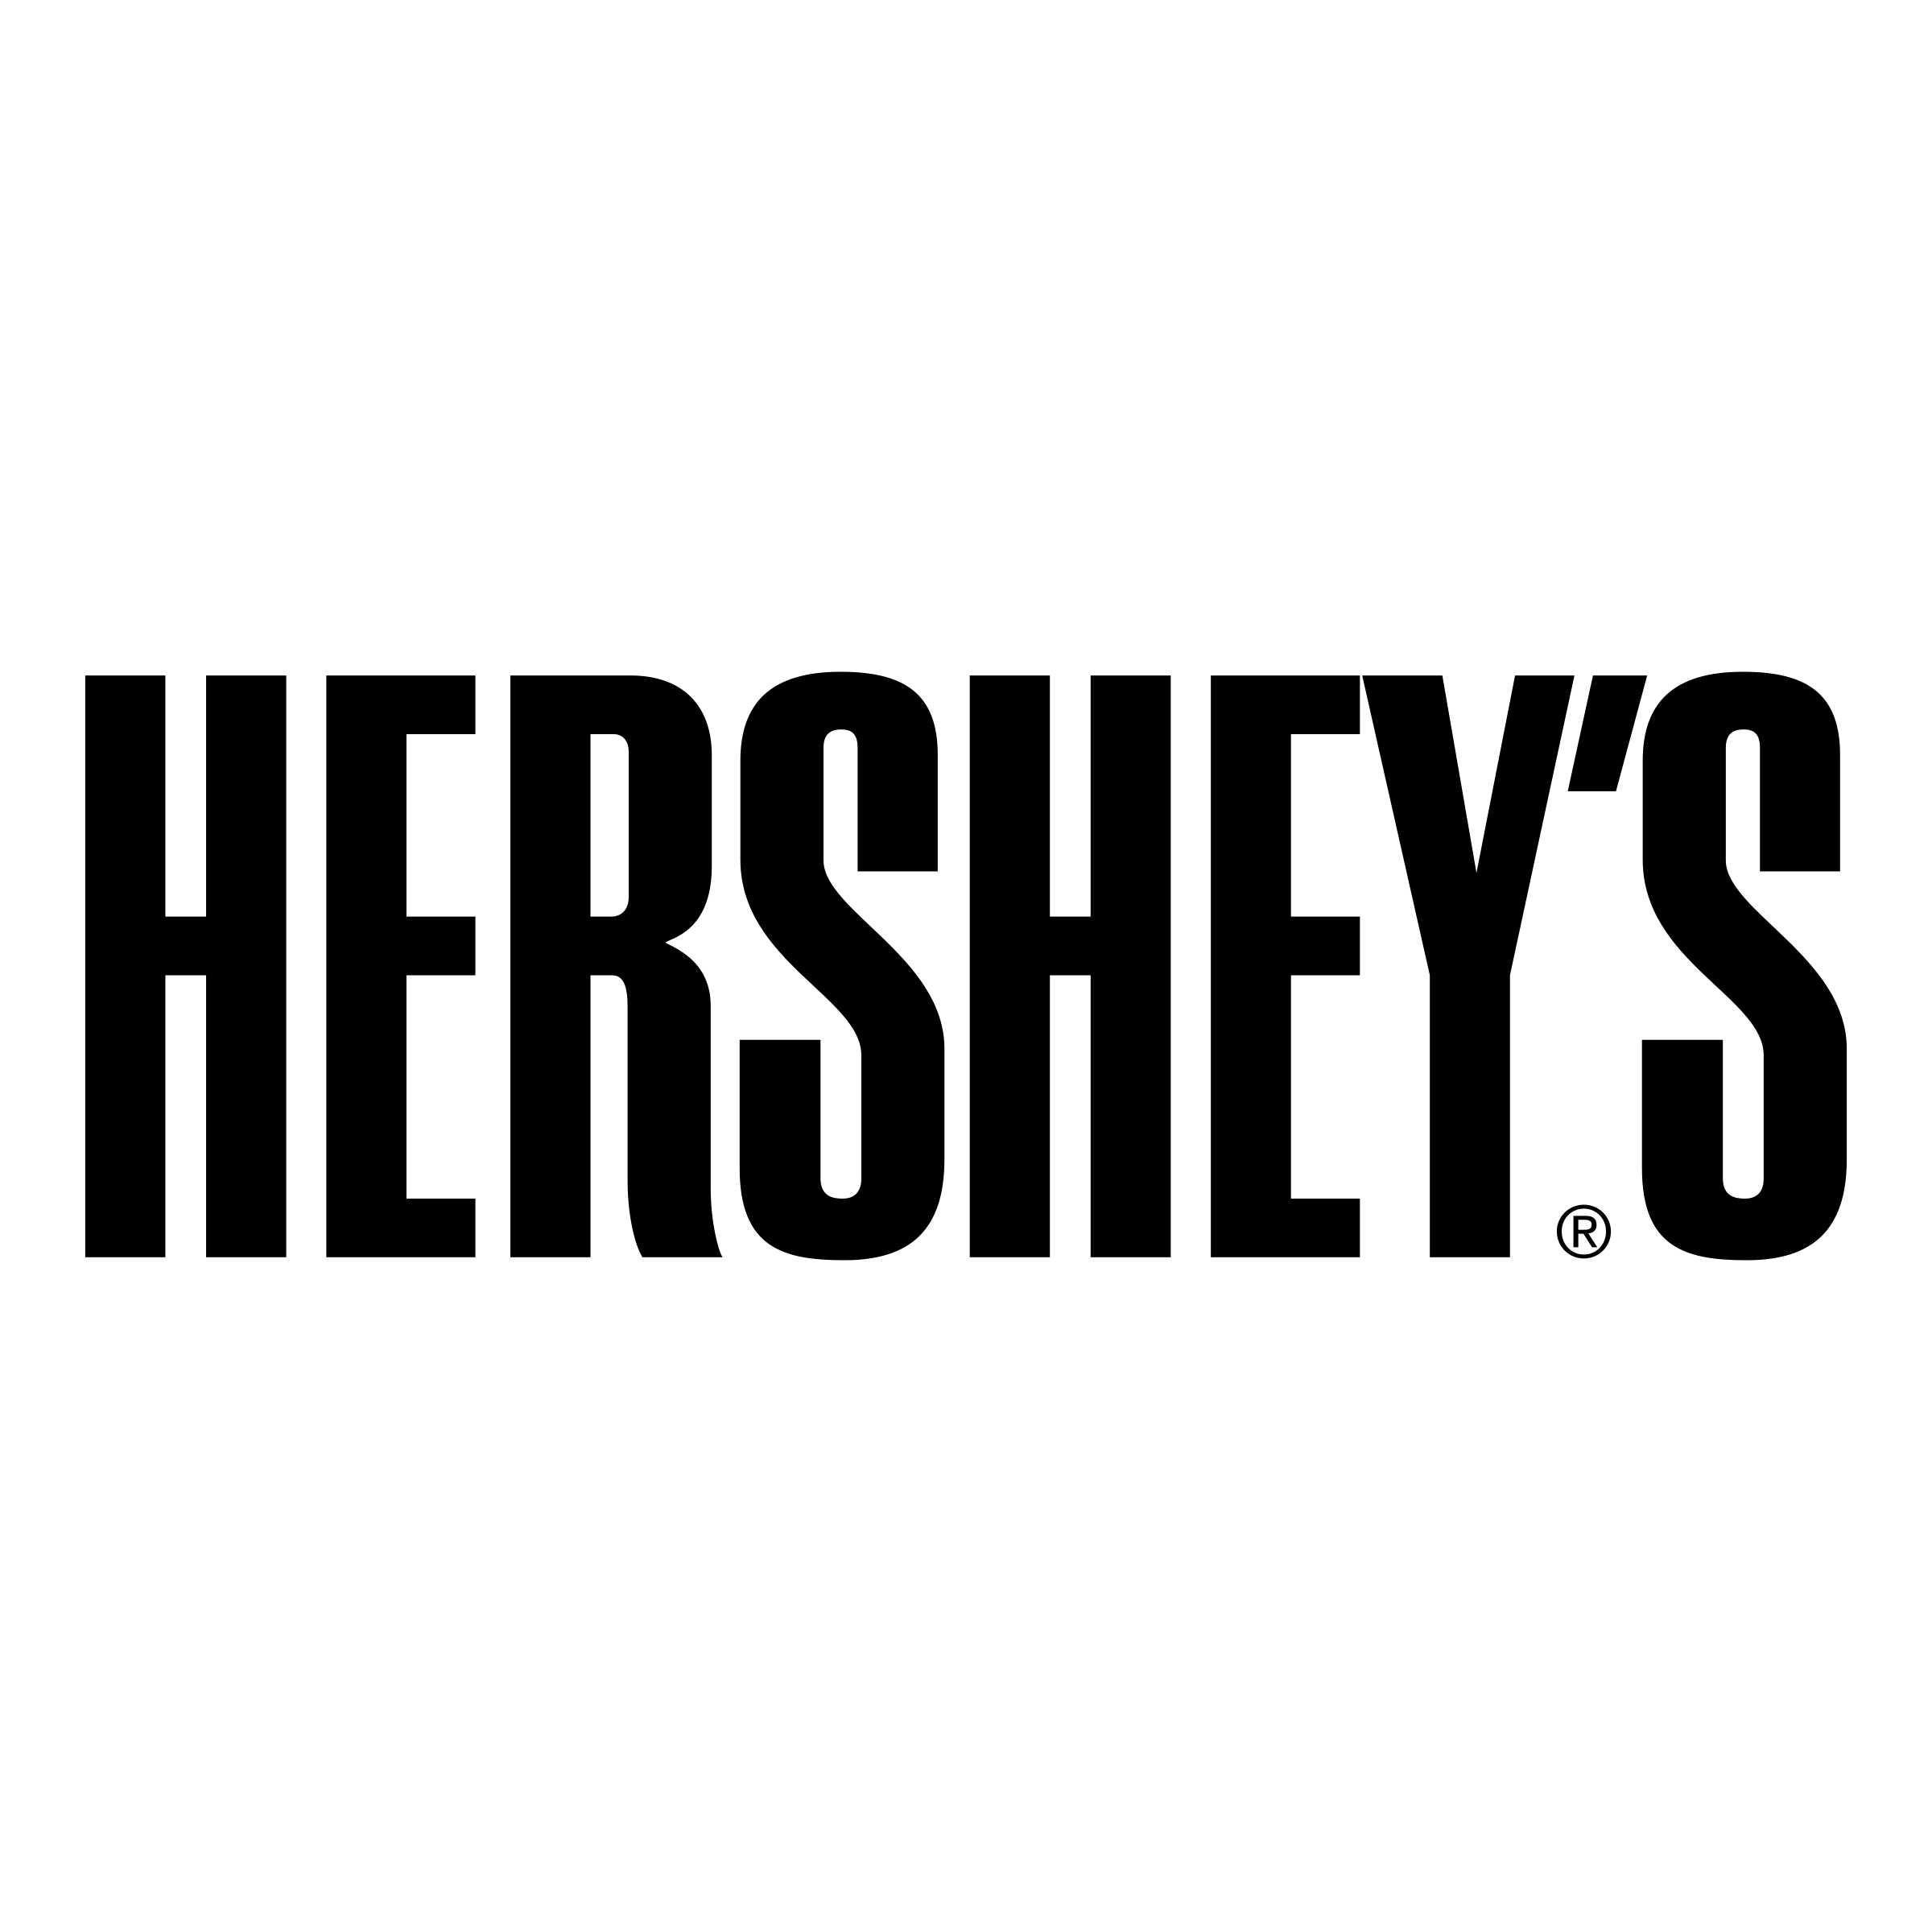 Hersey Logo - Hershey's Logo PNG Transparent & SVG Vector - Freebie Supply